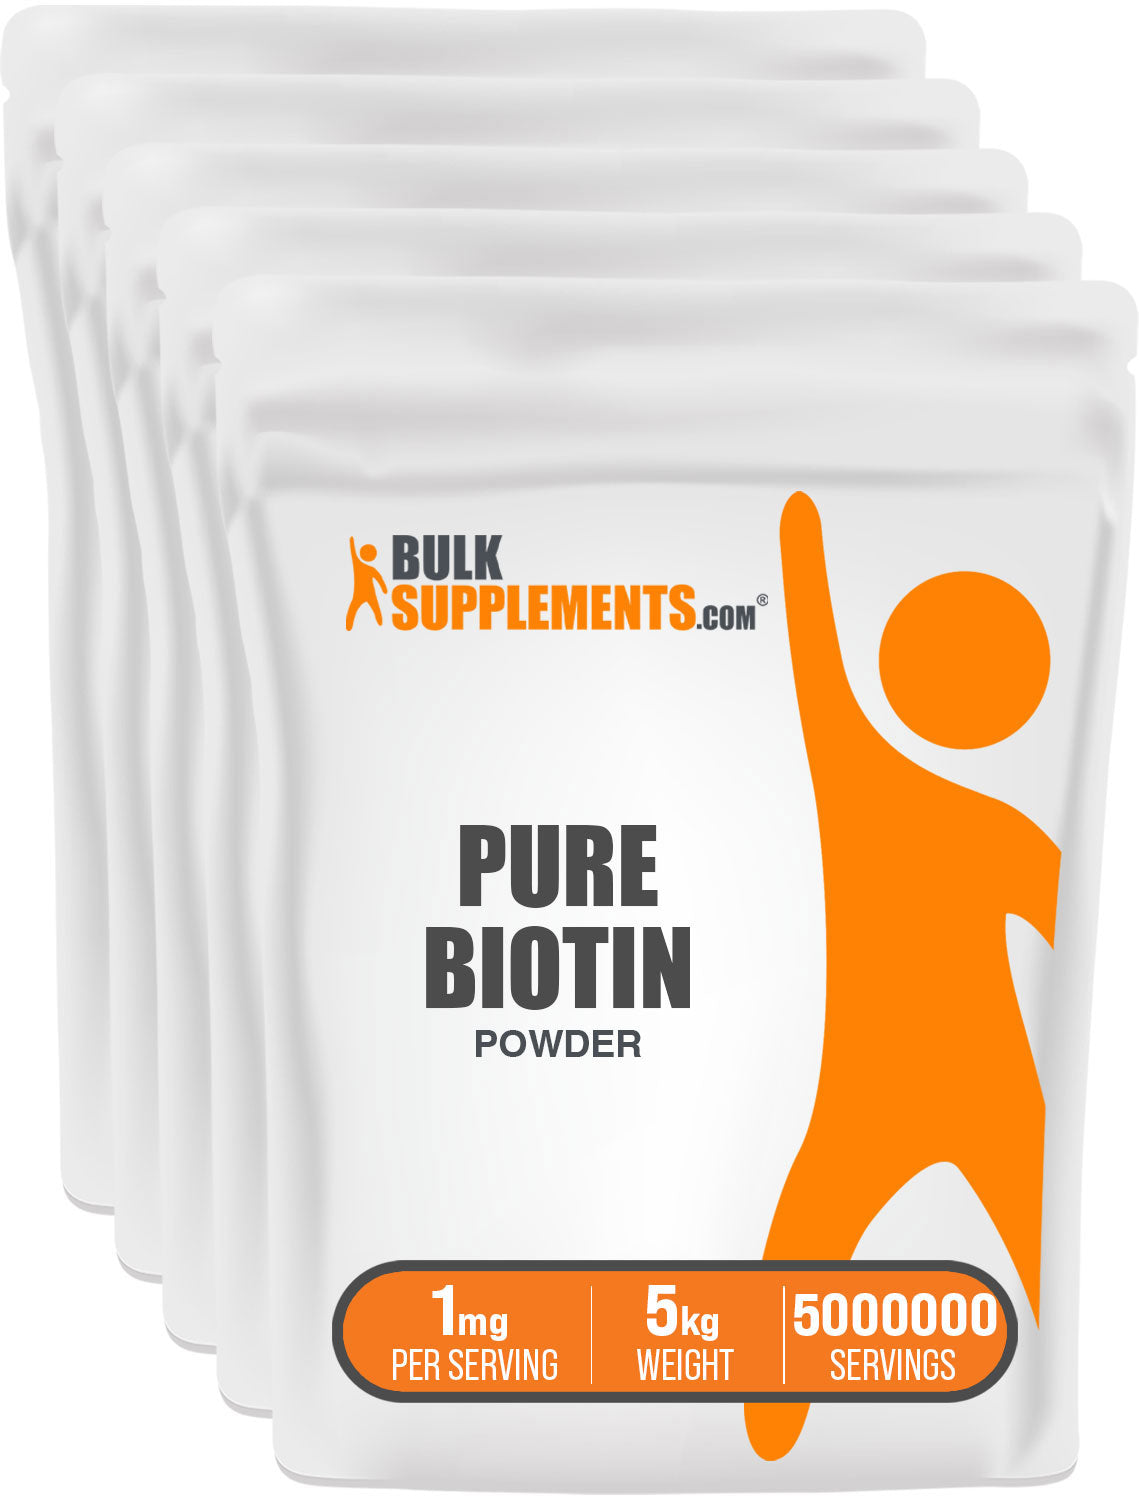 Pure Biotin Powder 5kg bag